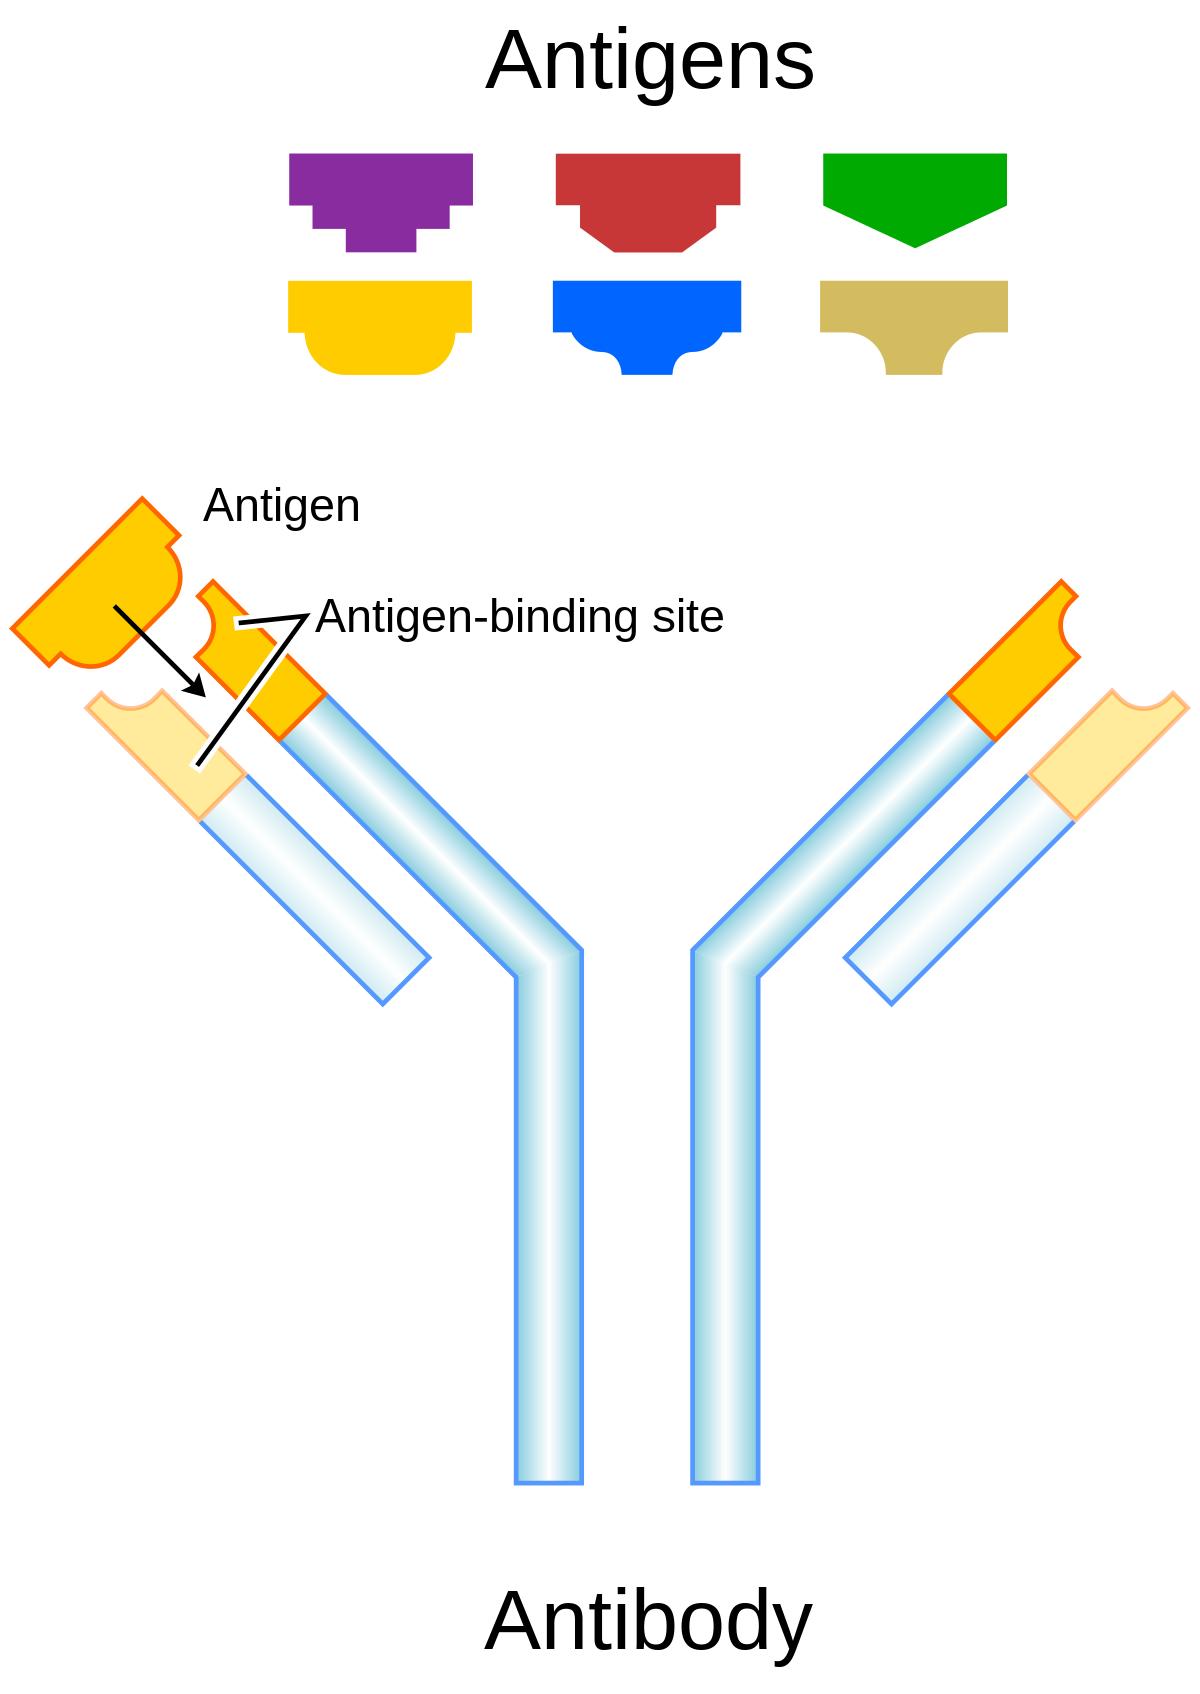 Antibody - Wikipedia